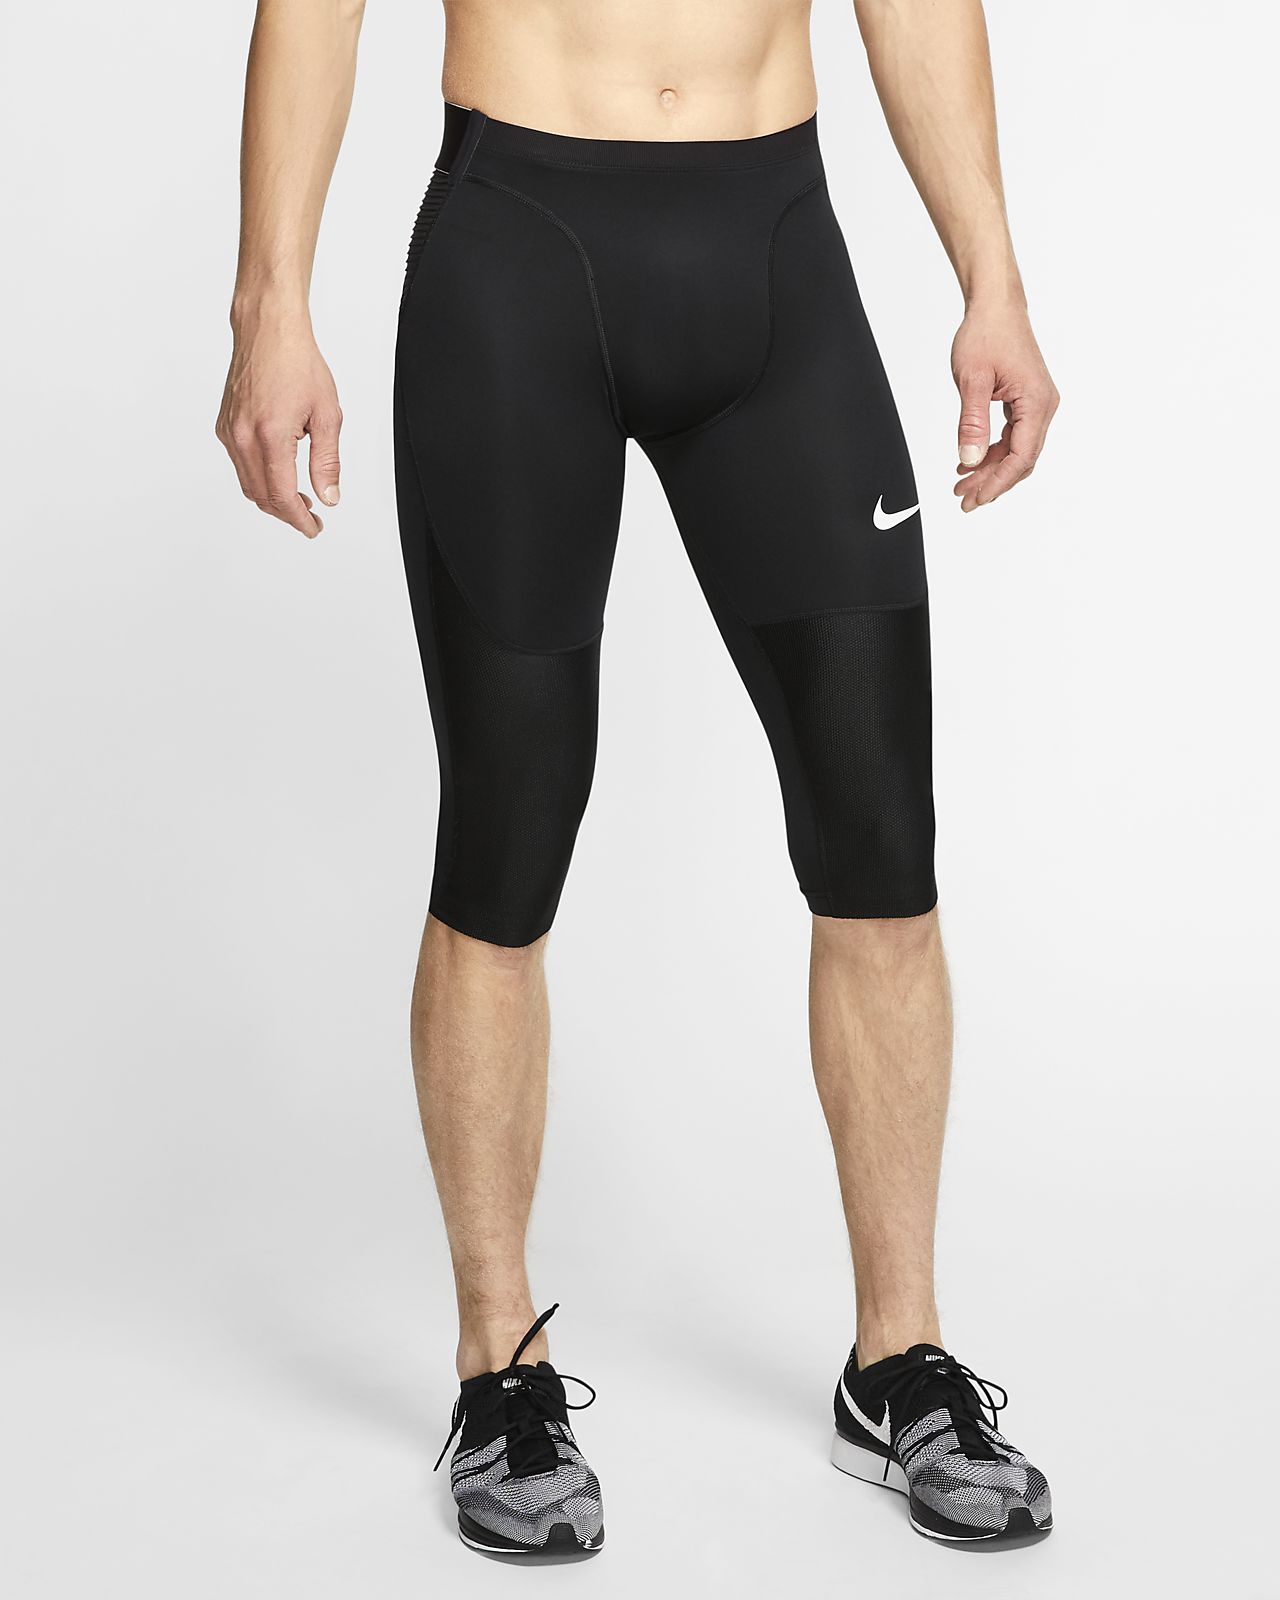 Nike Aeroswift Hybrid 2in1 Shorts Men's training Running Tights ...